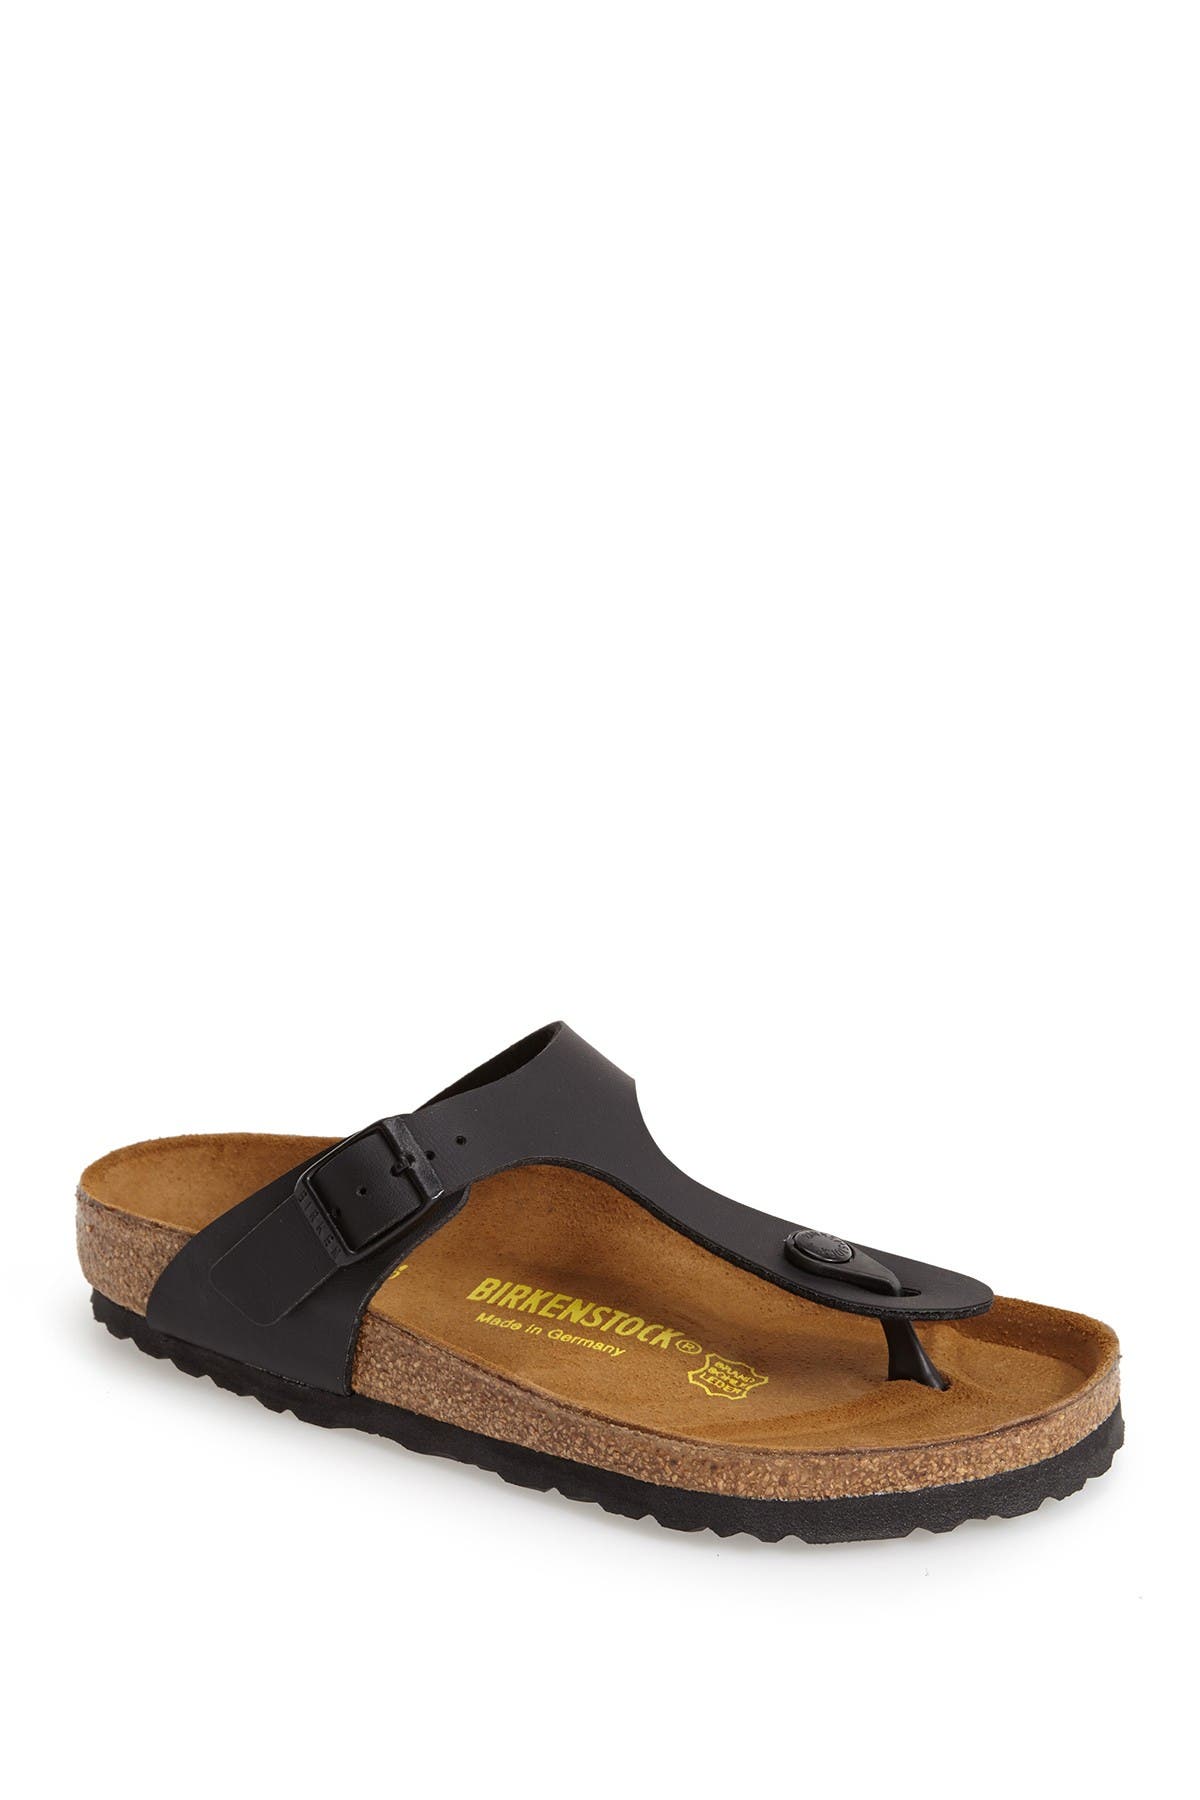 birkenstock gizeh thong comfort sandal